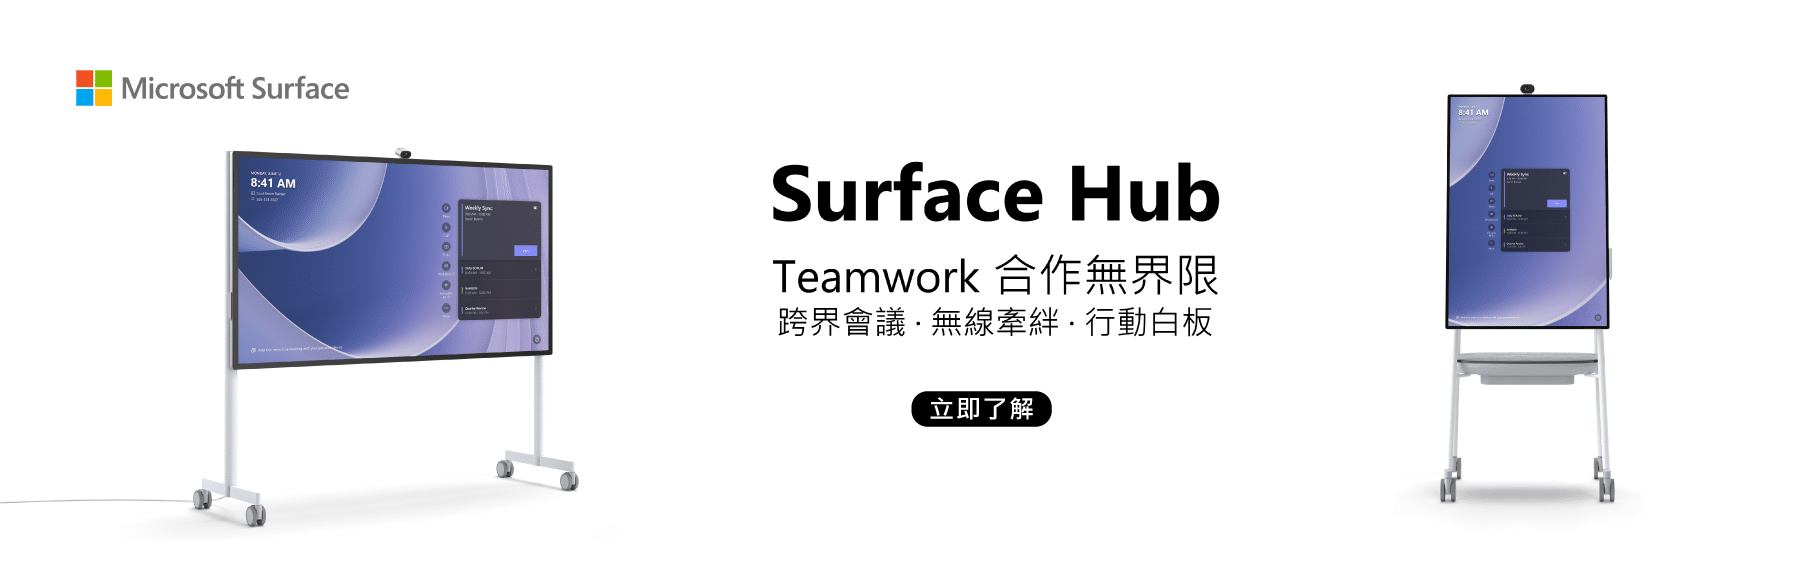 Surface hub benner